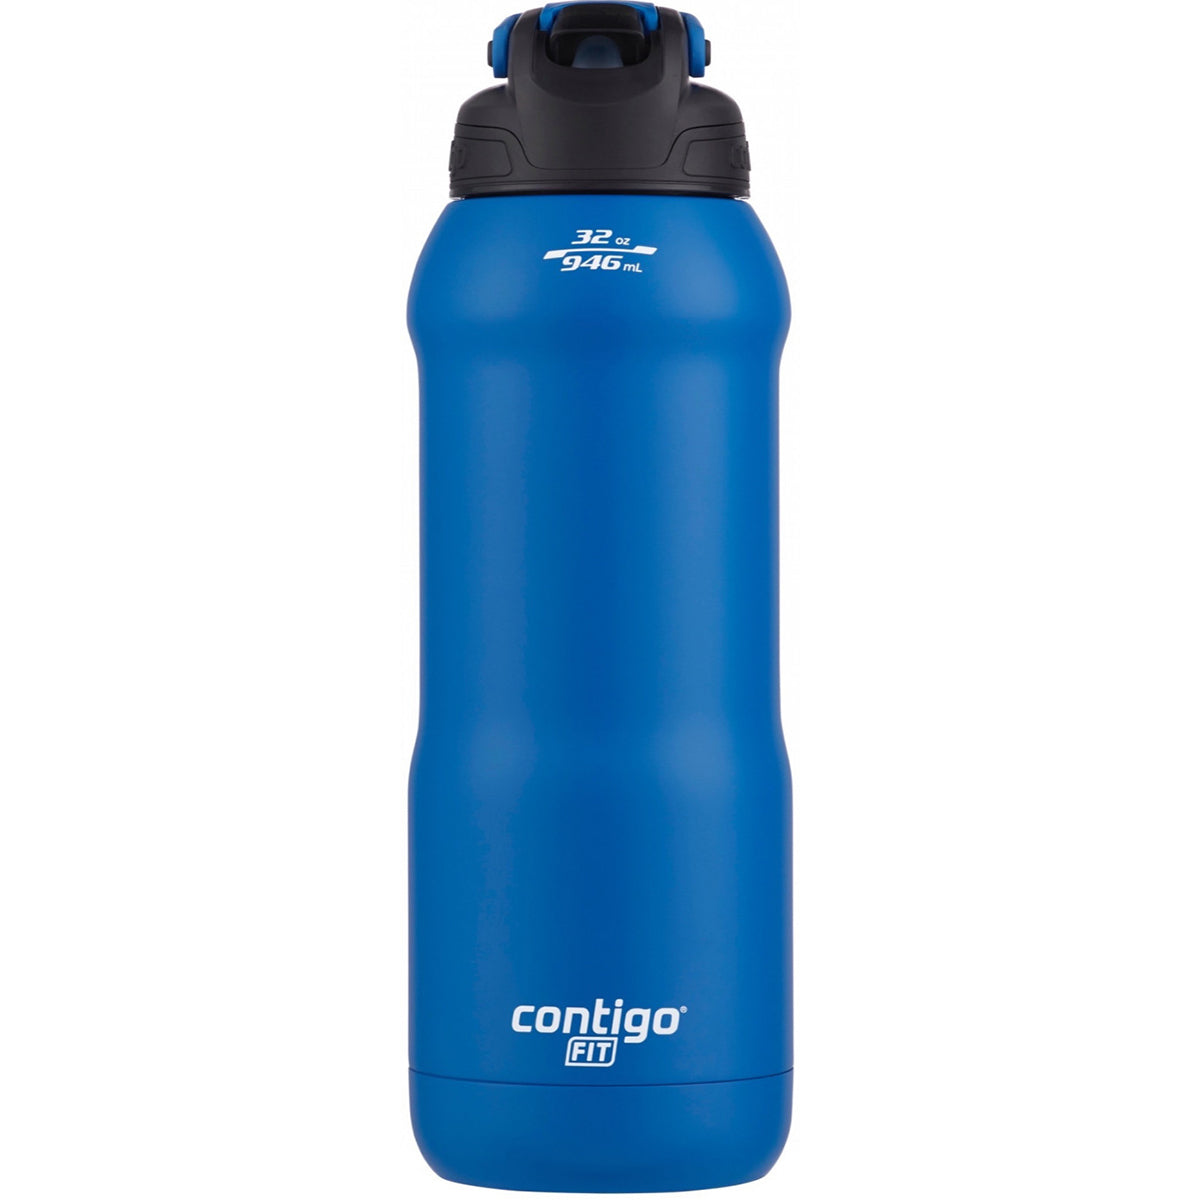 Contigo 32 oz. Fit Insulated Stainless Steel AutoSpout Straw Water Bottle Contigo